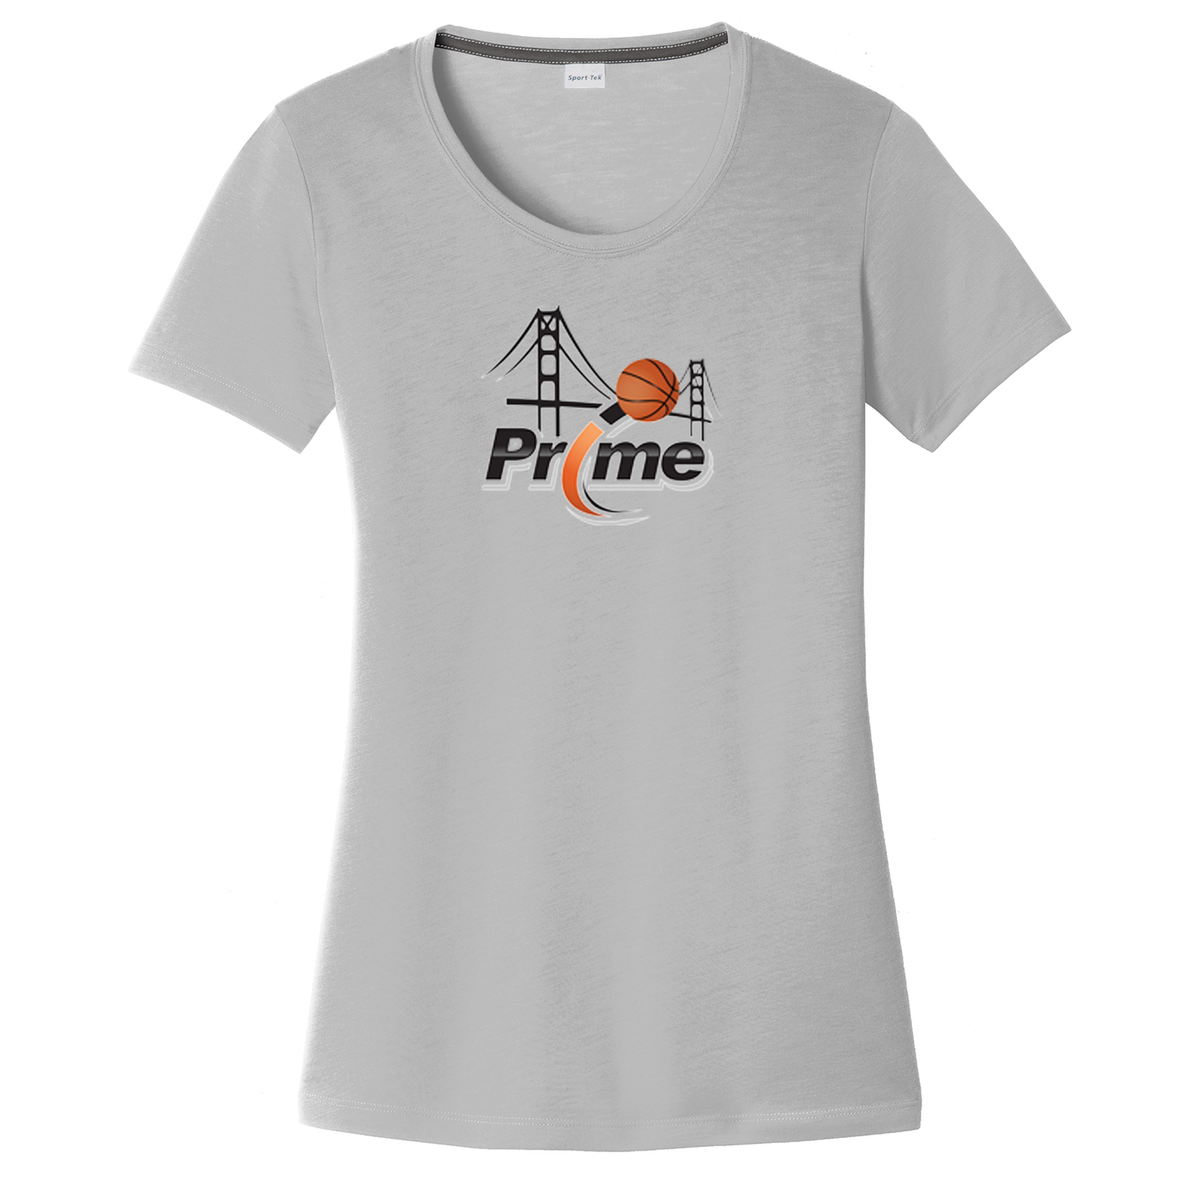 NT2C Prime Basketball Women's CottonTouch Performance T-Shirt